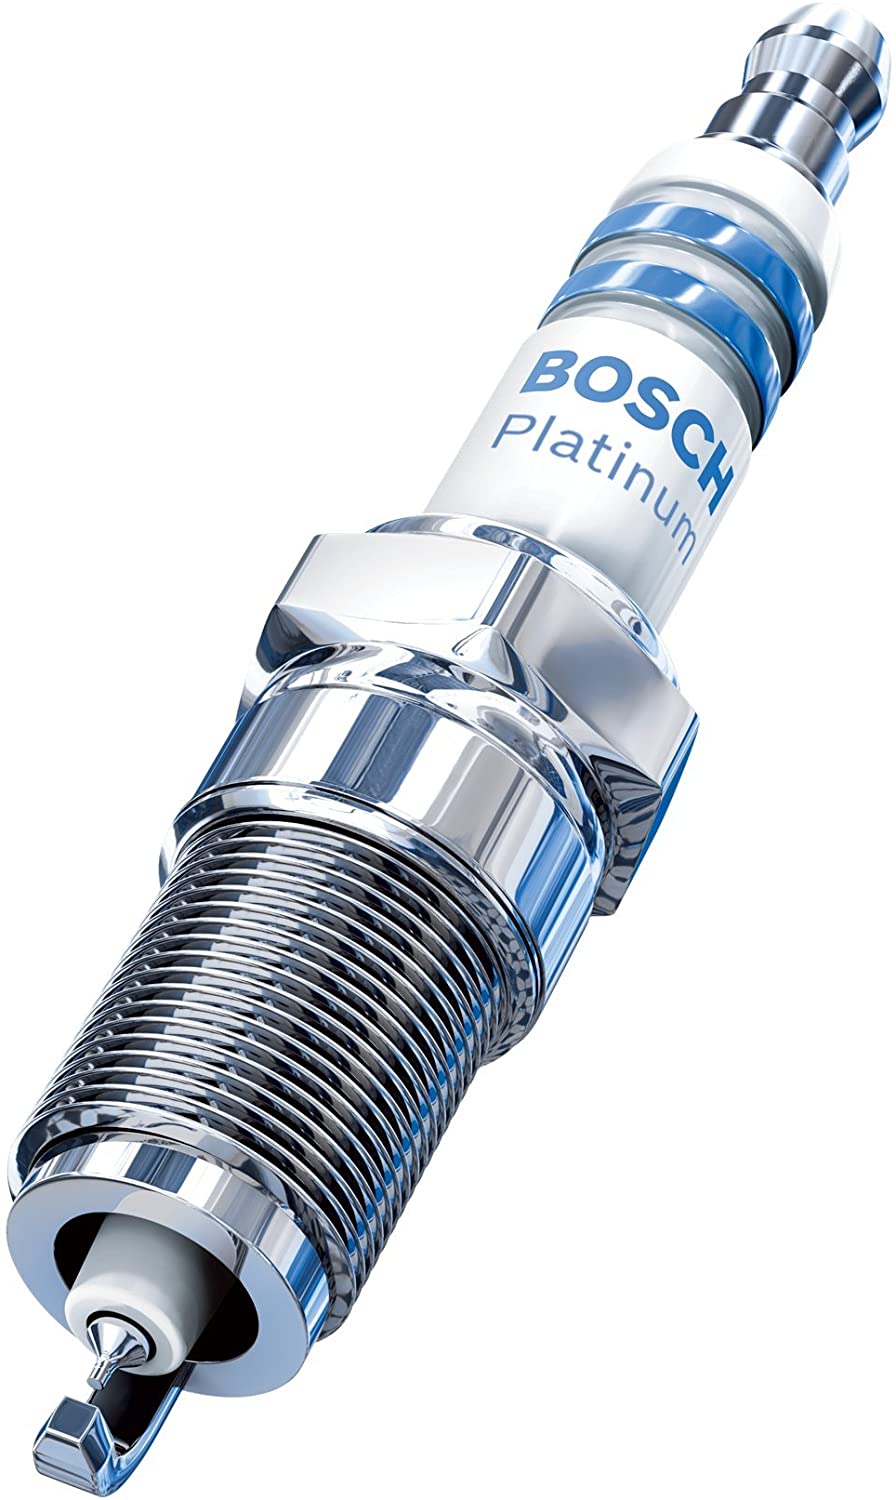 Bosch 6736 Platinum Spark Plug for Select Chevrolet, Chrysler, Dodge, Eagle, GMC, Honda, Hyundai, Isuzu, Kia, Jeep, Mazda, Mitsubishi, Mercedes, Nissan, Plymouth, Saab, Suzuki, Toyota +More (4 Pack)